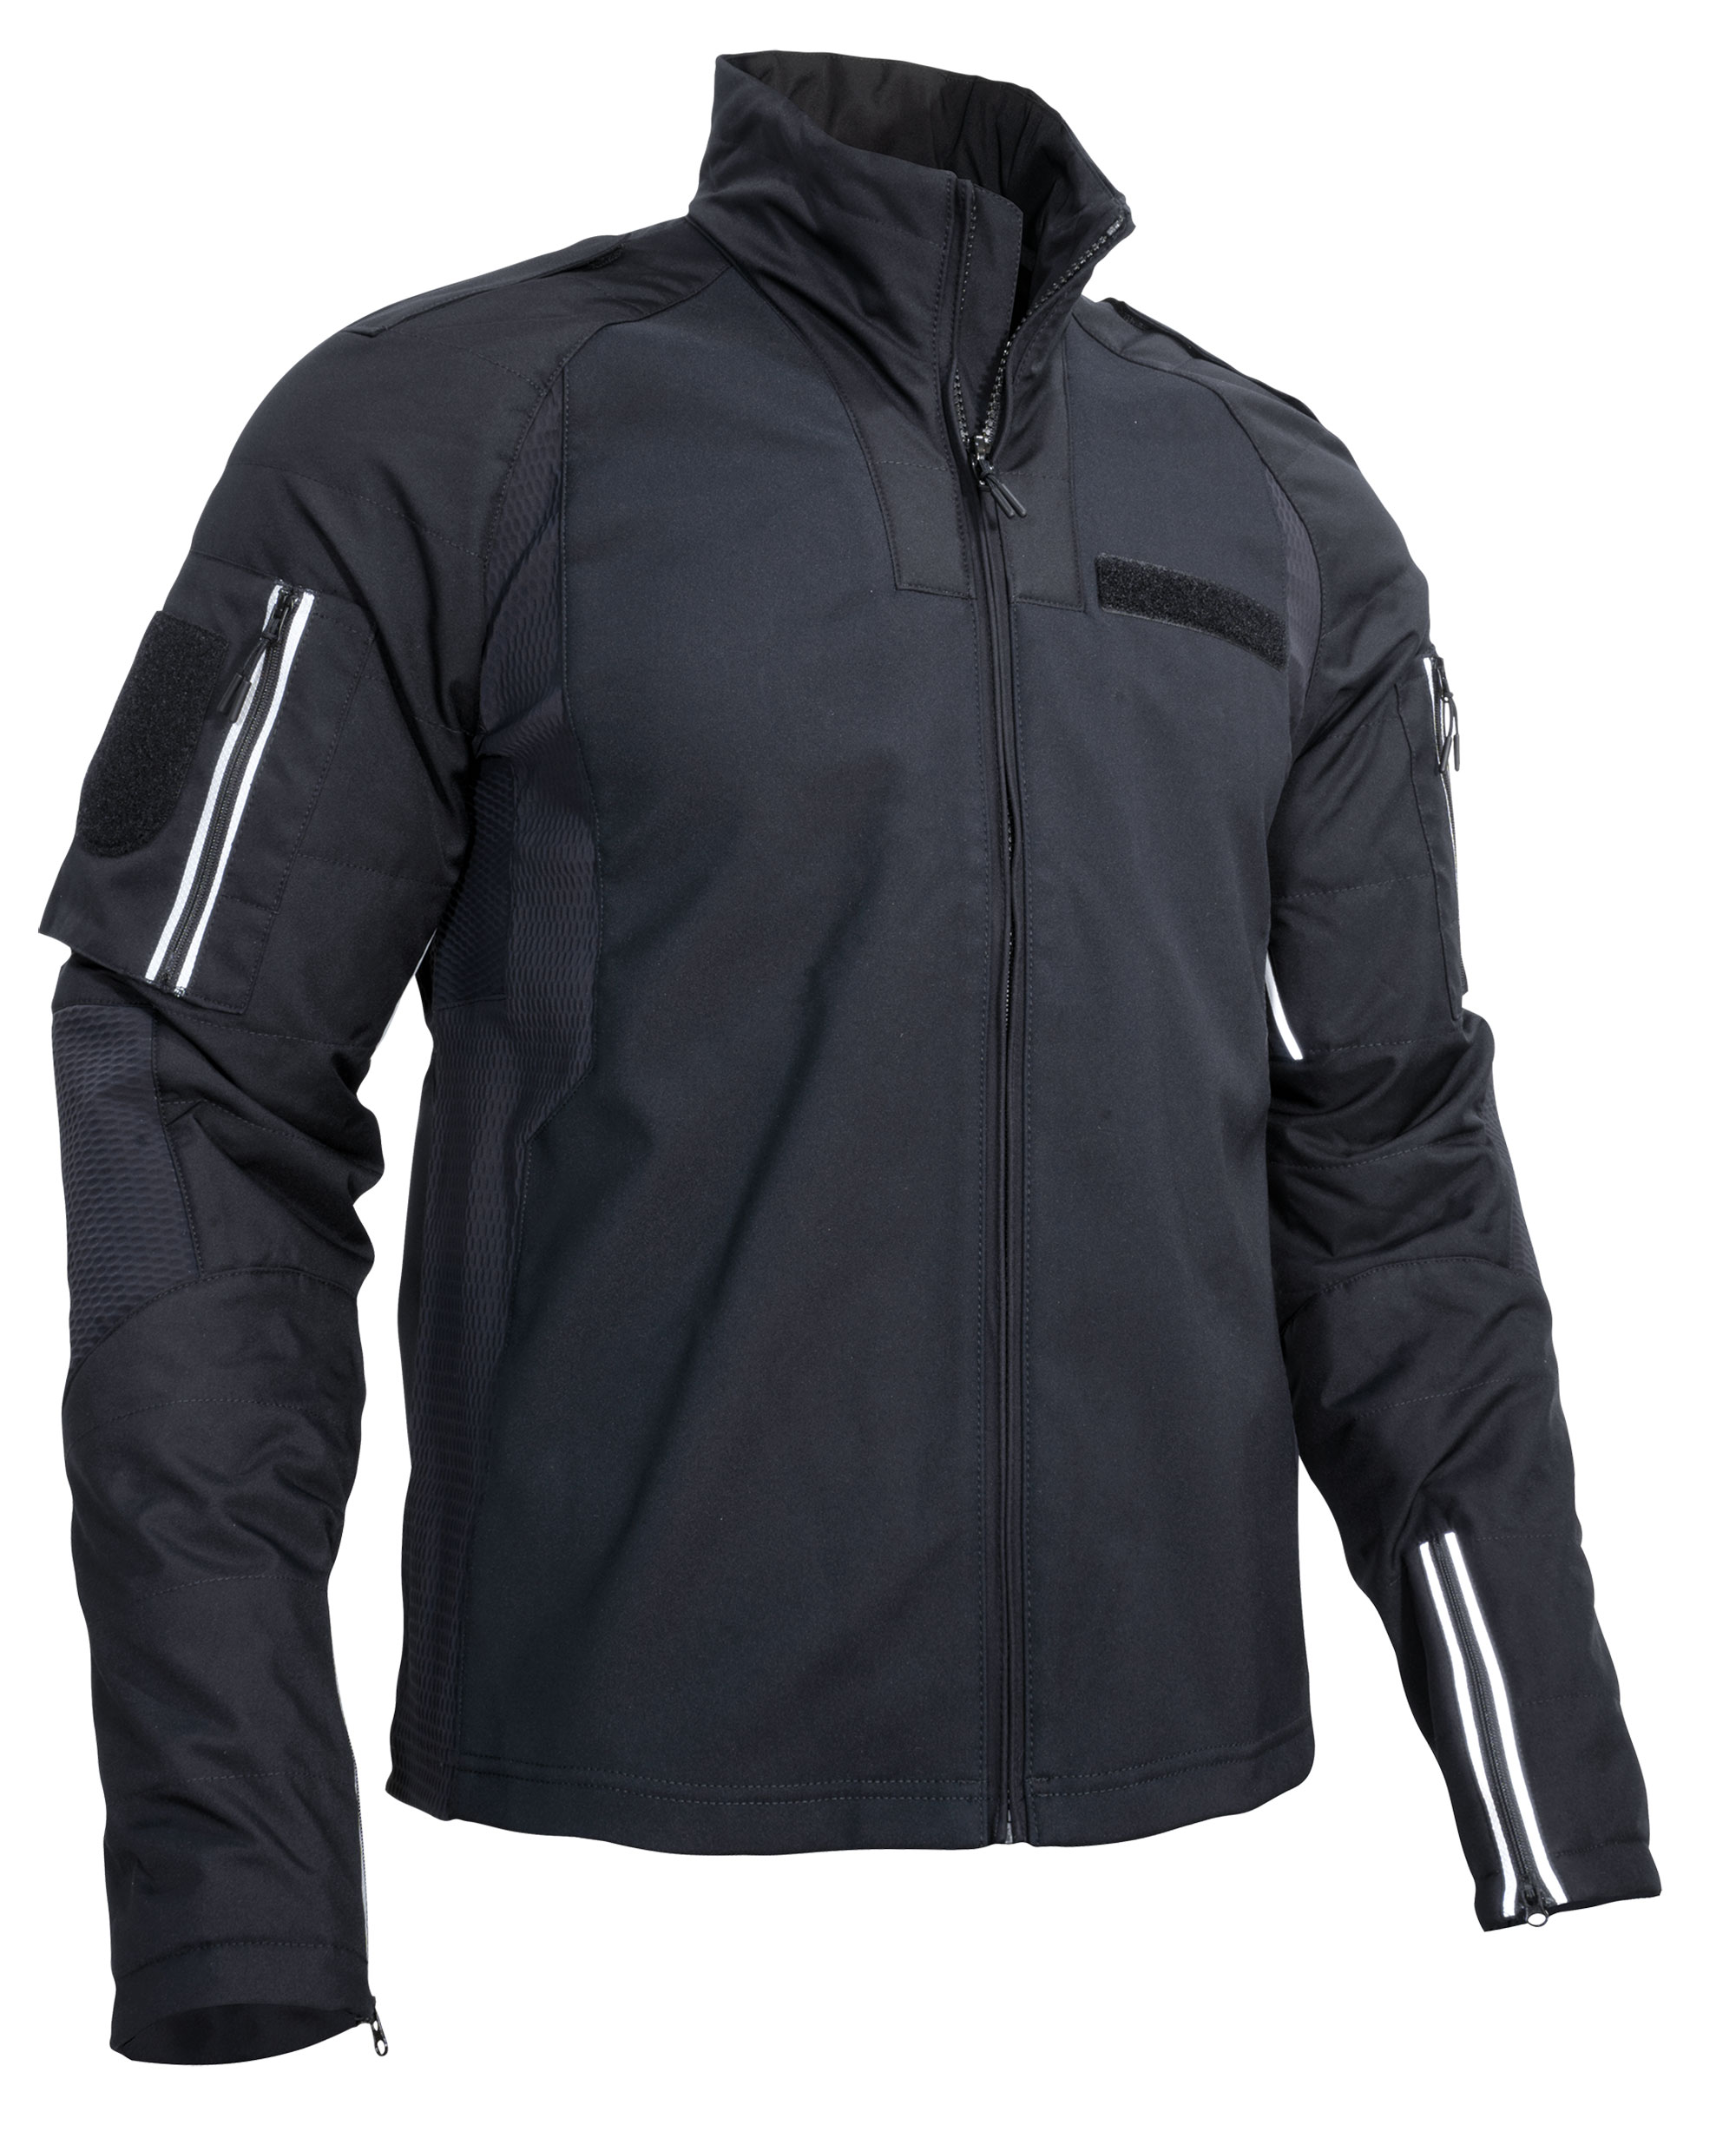 Schöffel ATH softshell jacket Basic Parisblue | Recon Company